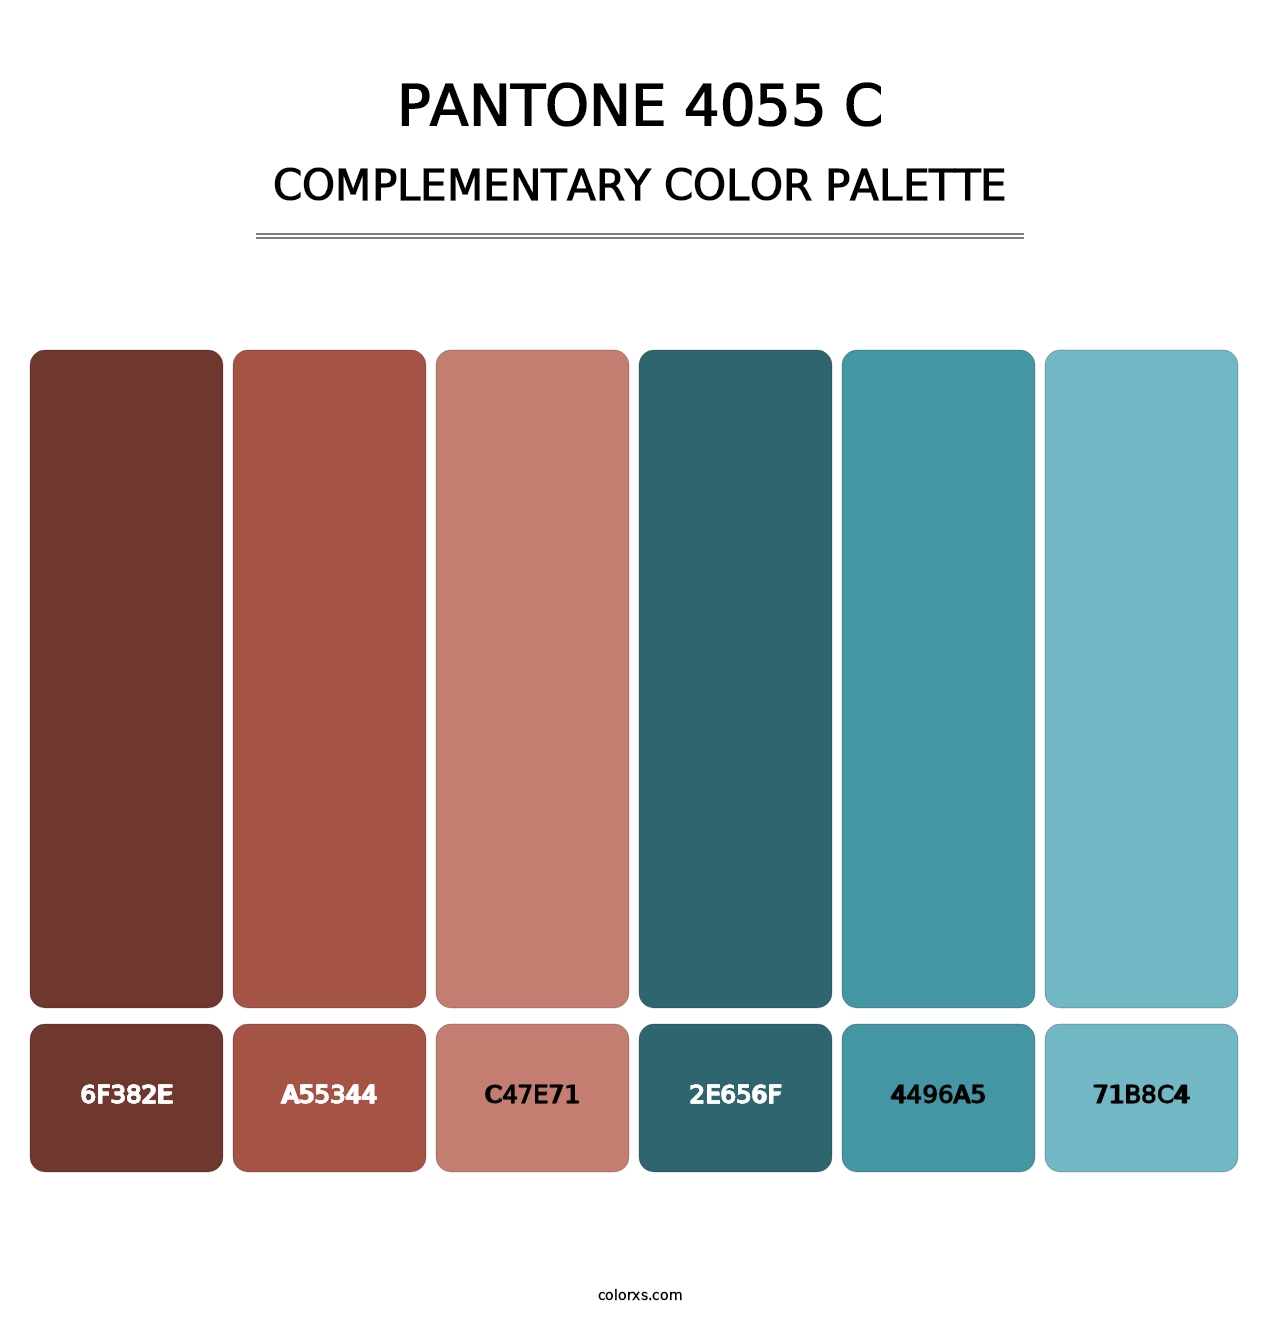 PANTONE 4055 C - Complementary Color Palette